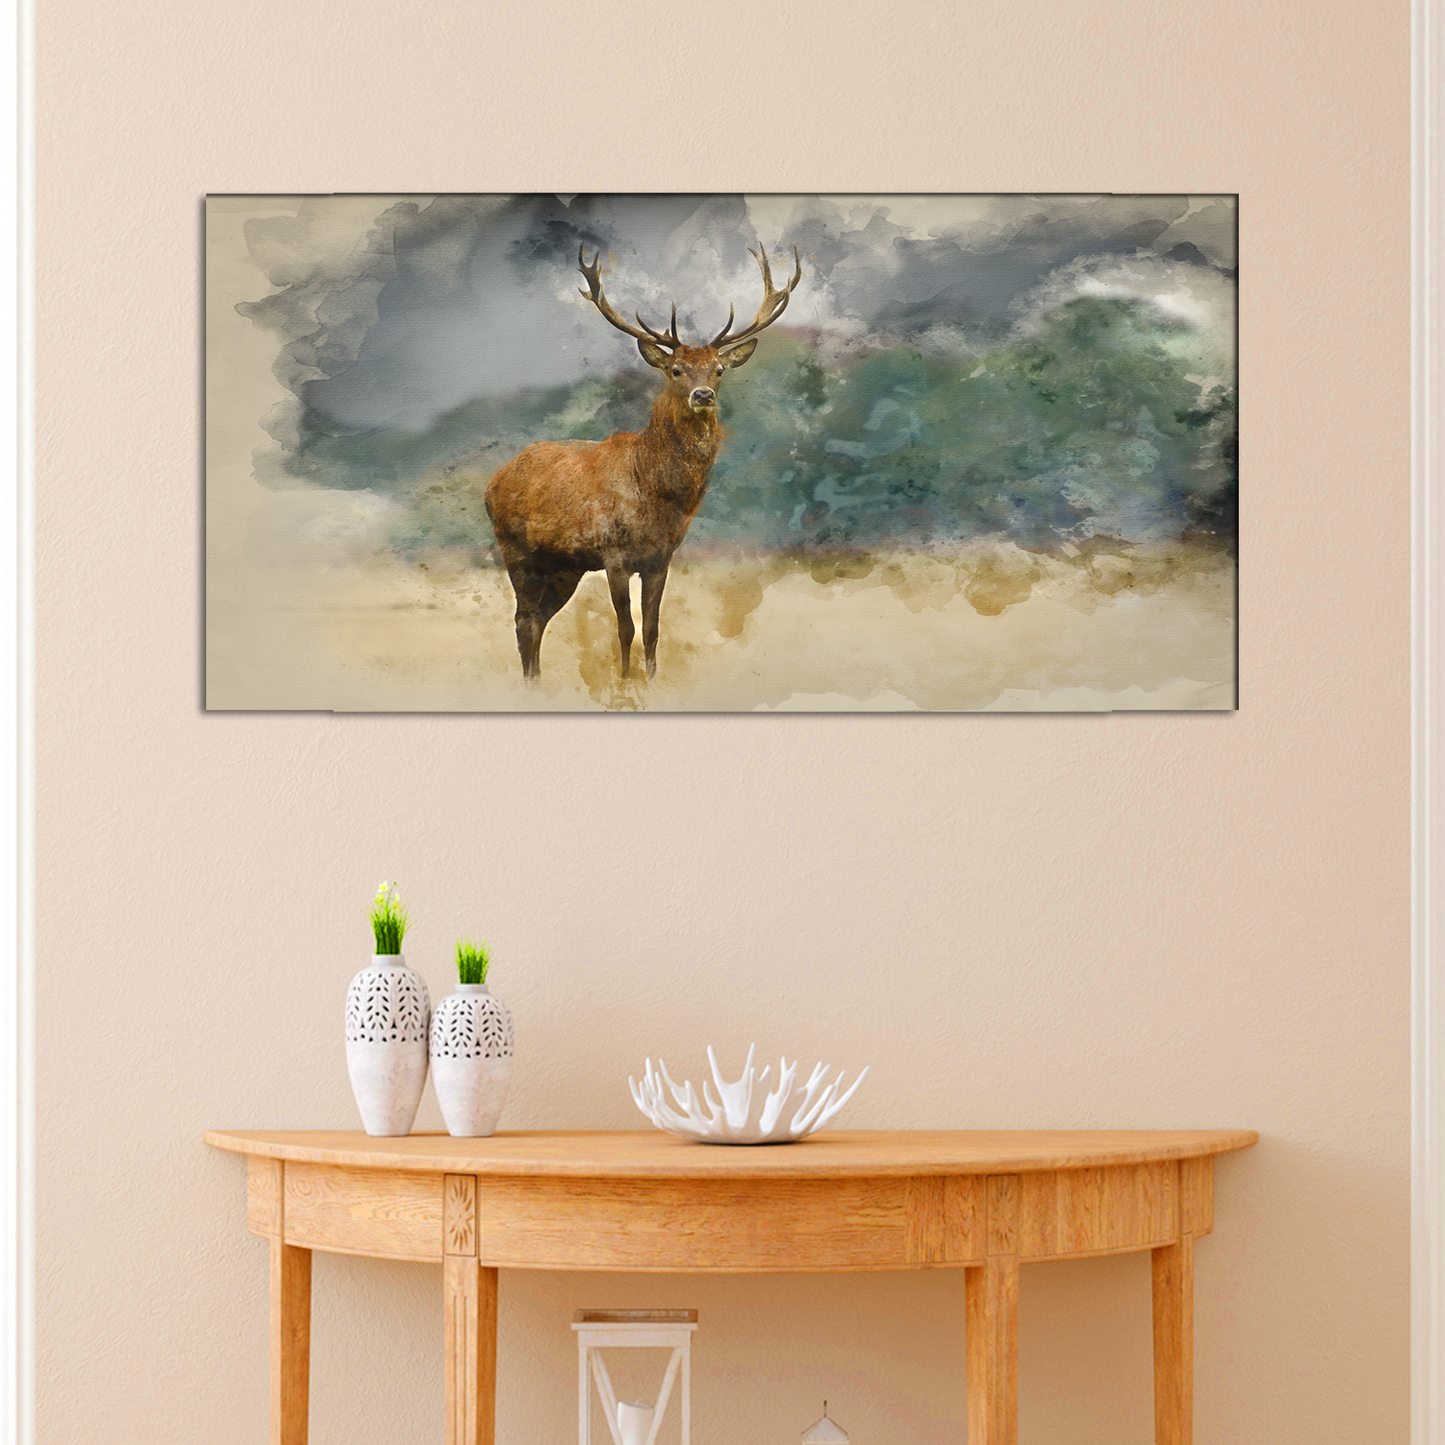 Beautiful Deer Animal Canvas Wall Painting